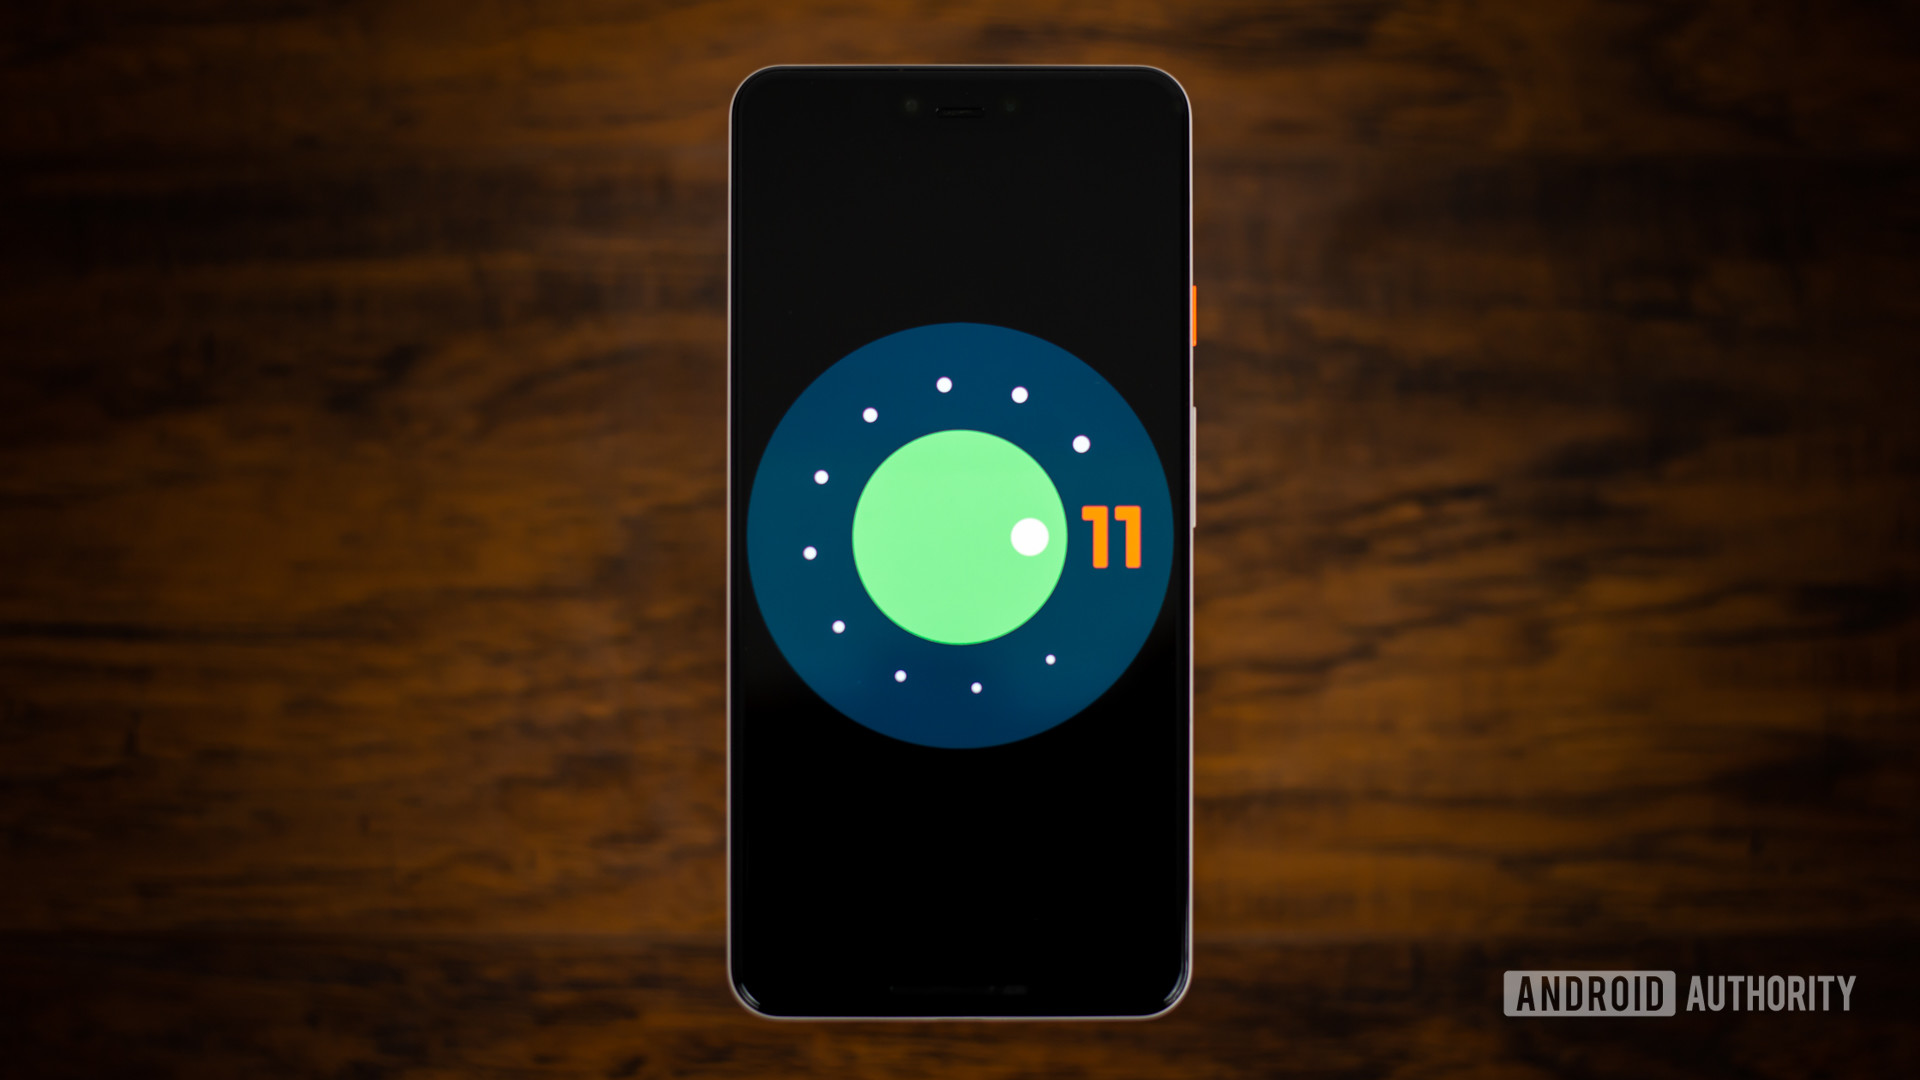 Android 11 logo stock photo 1